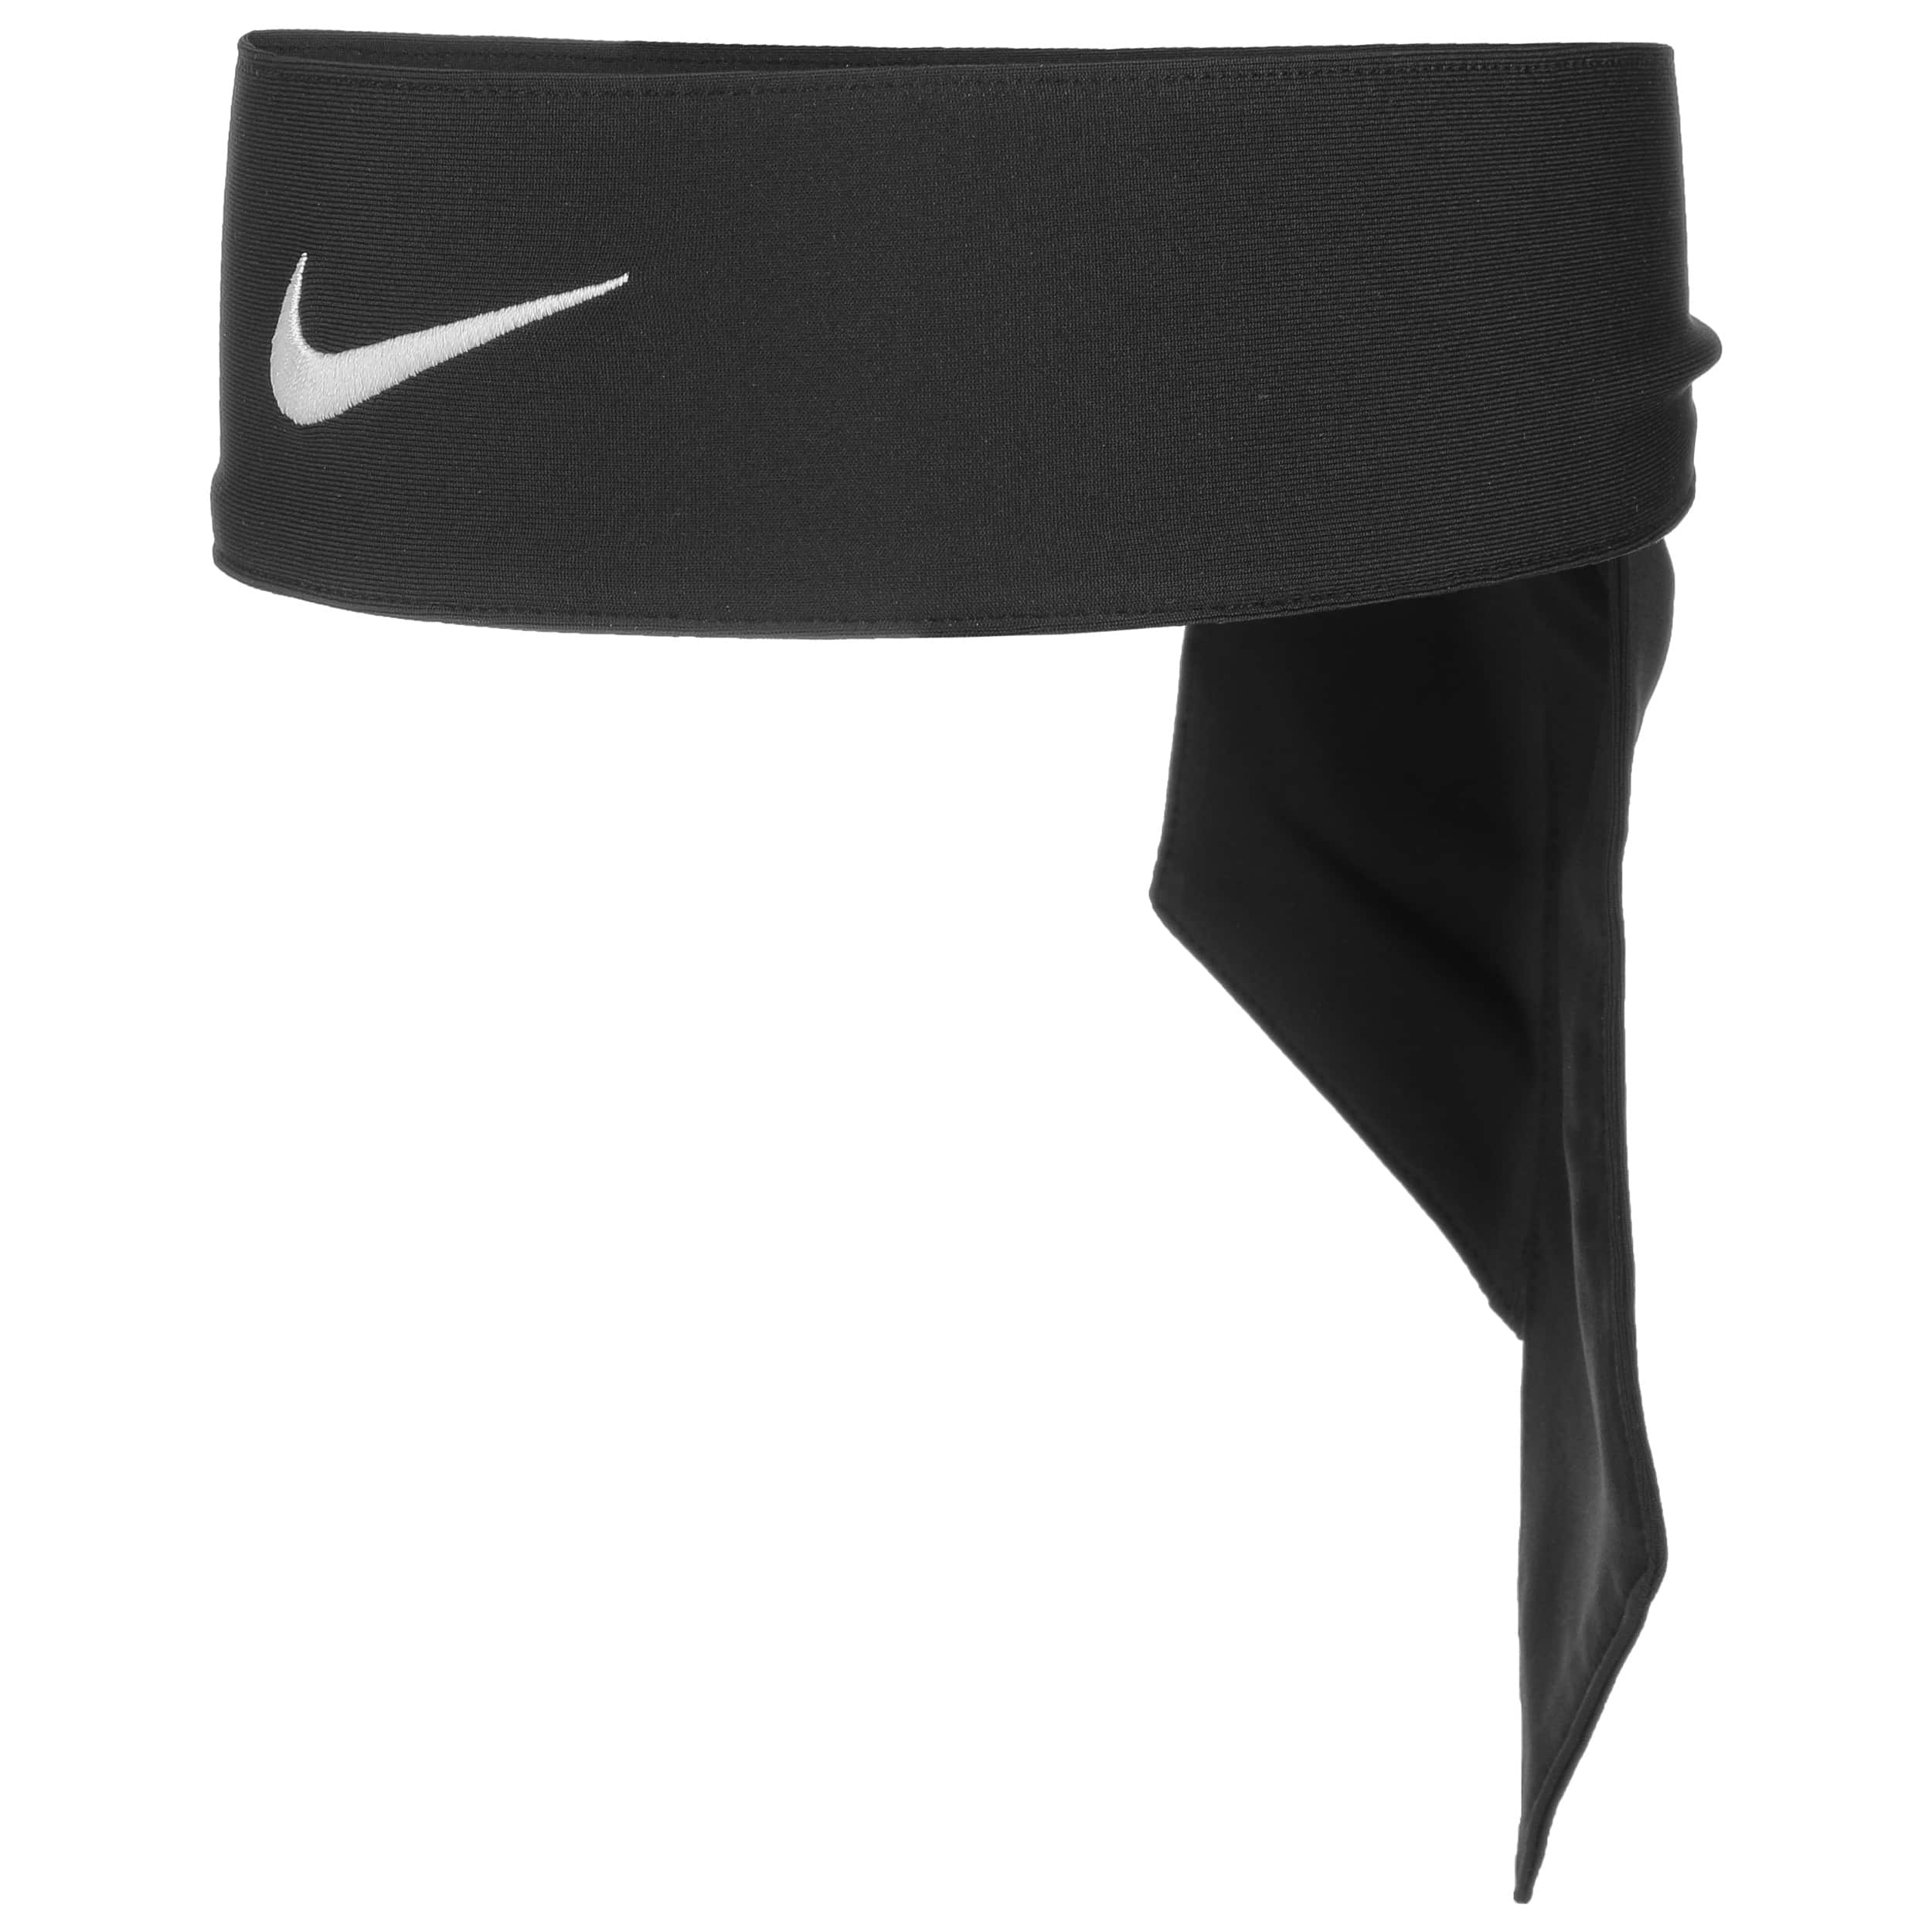 Cinta Nike Dri-Fit Head Tie 2.0 by Nike €